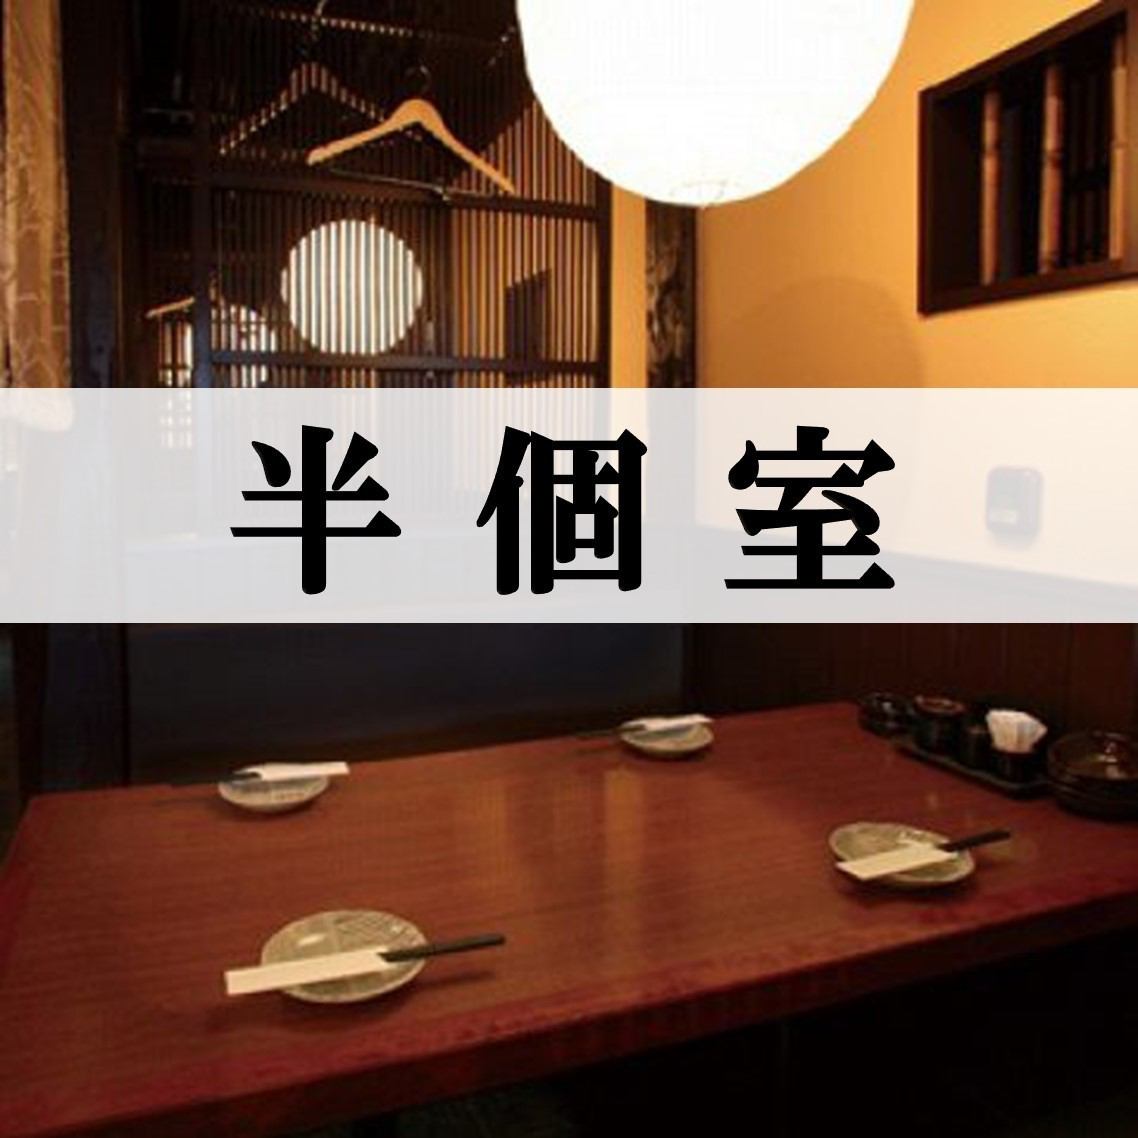 Nagomi派对套餐3,000日元♪最适合各种宴会！